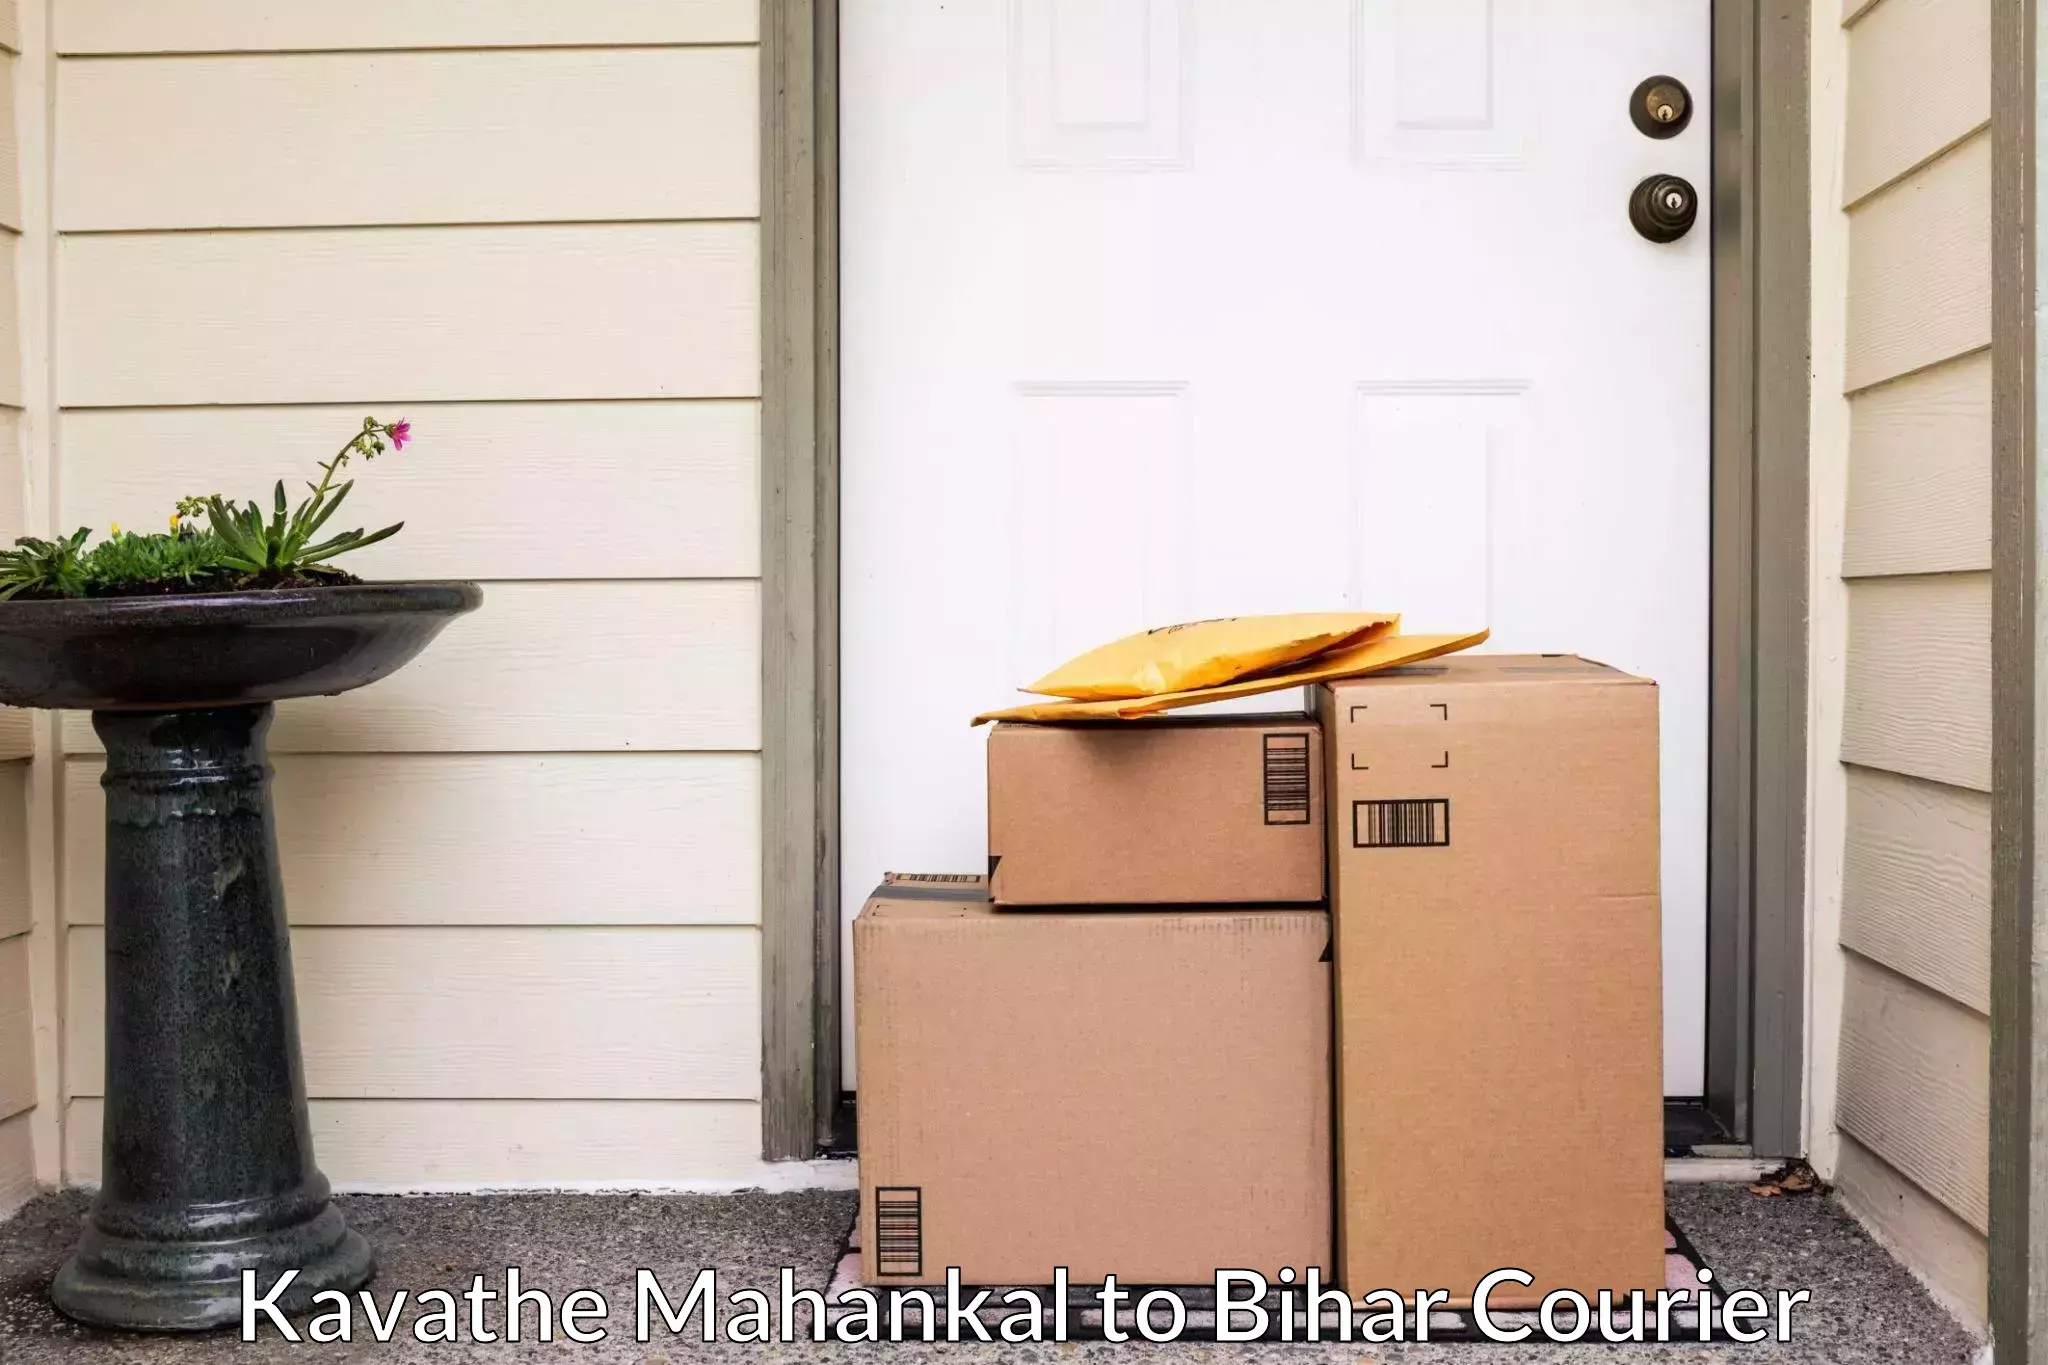 Home goods moving company Kavathe Mahankal to Bihar